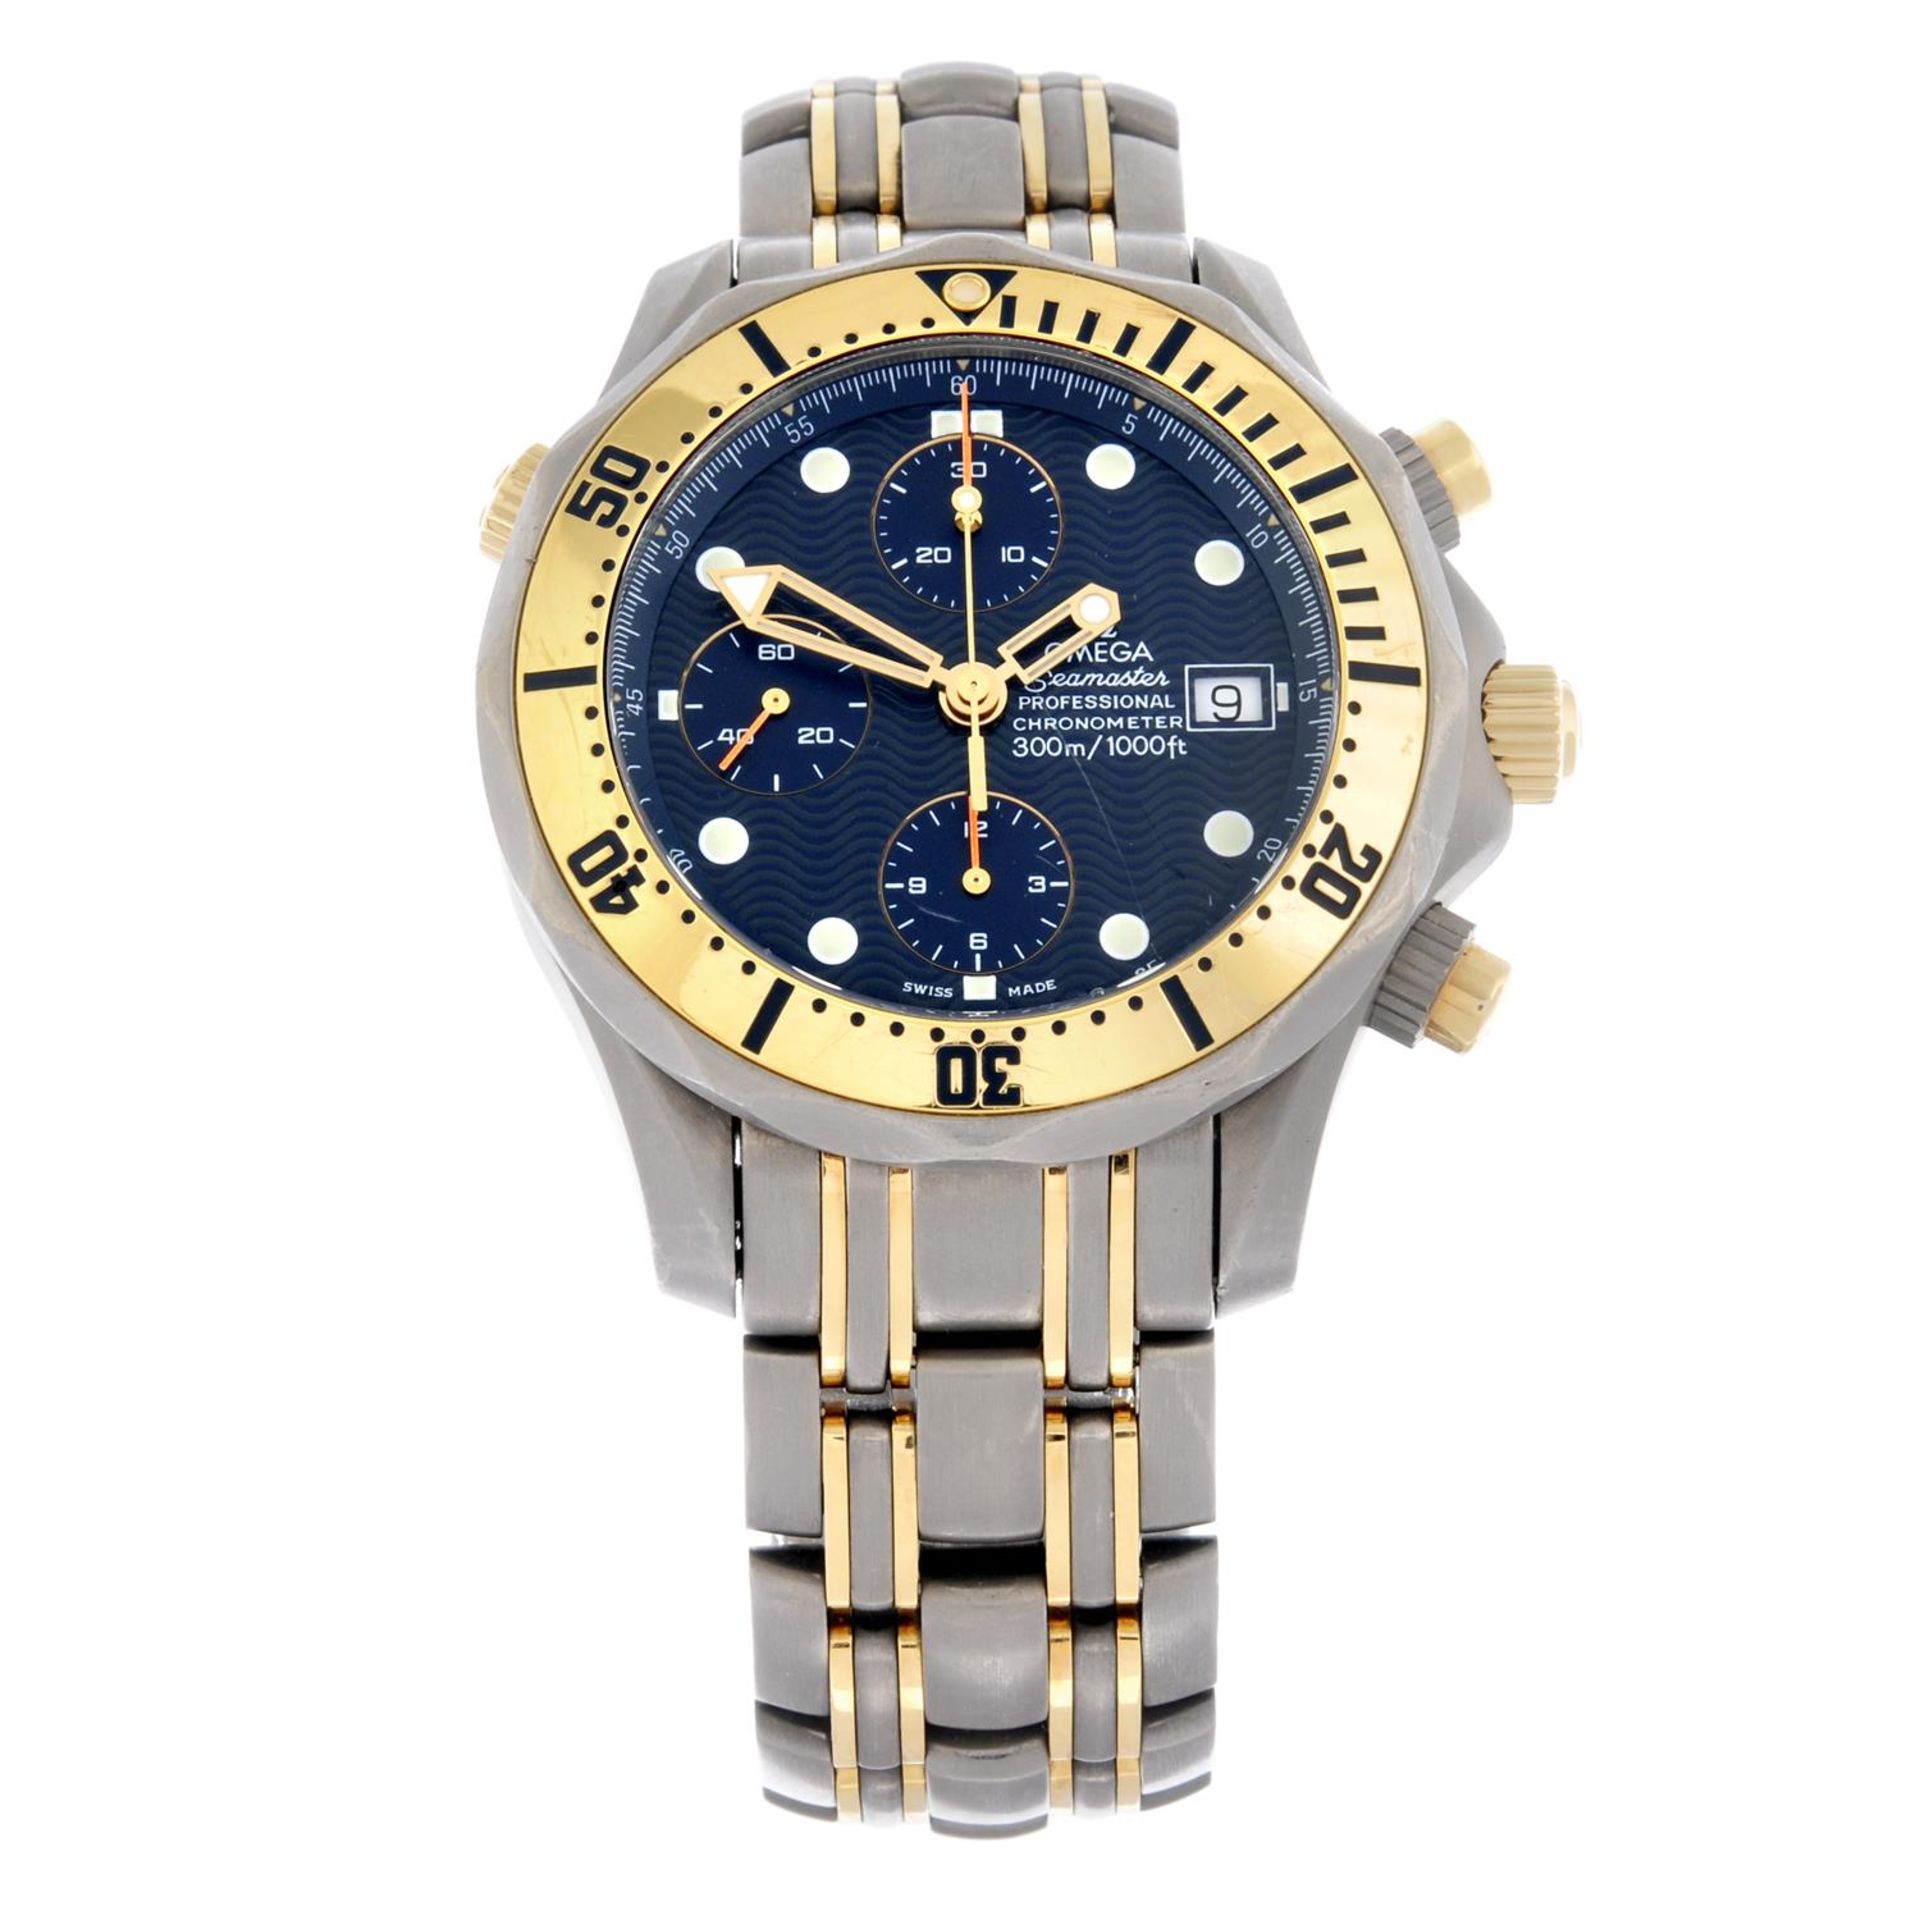 OMEGA - a bi-metal Seamaster Professional chronograph bracelet watch, 42mm.